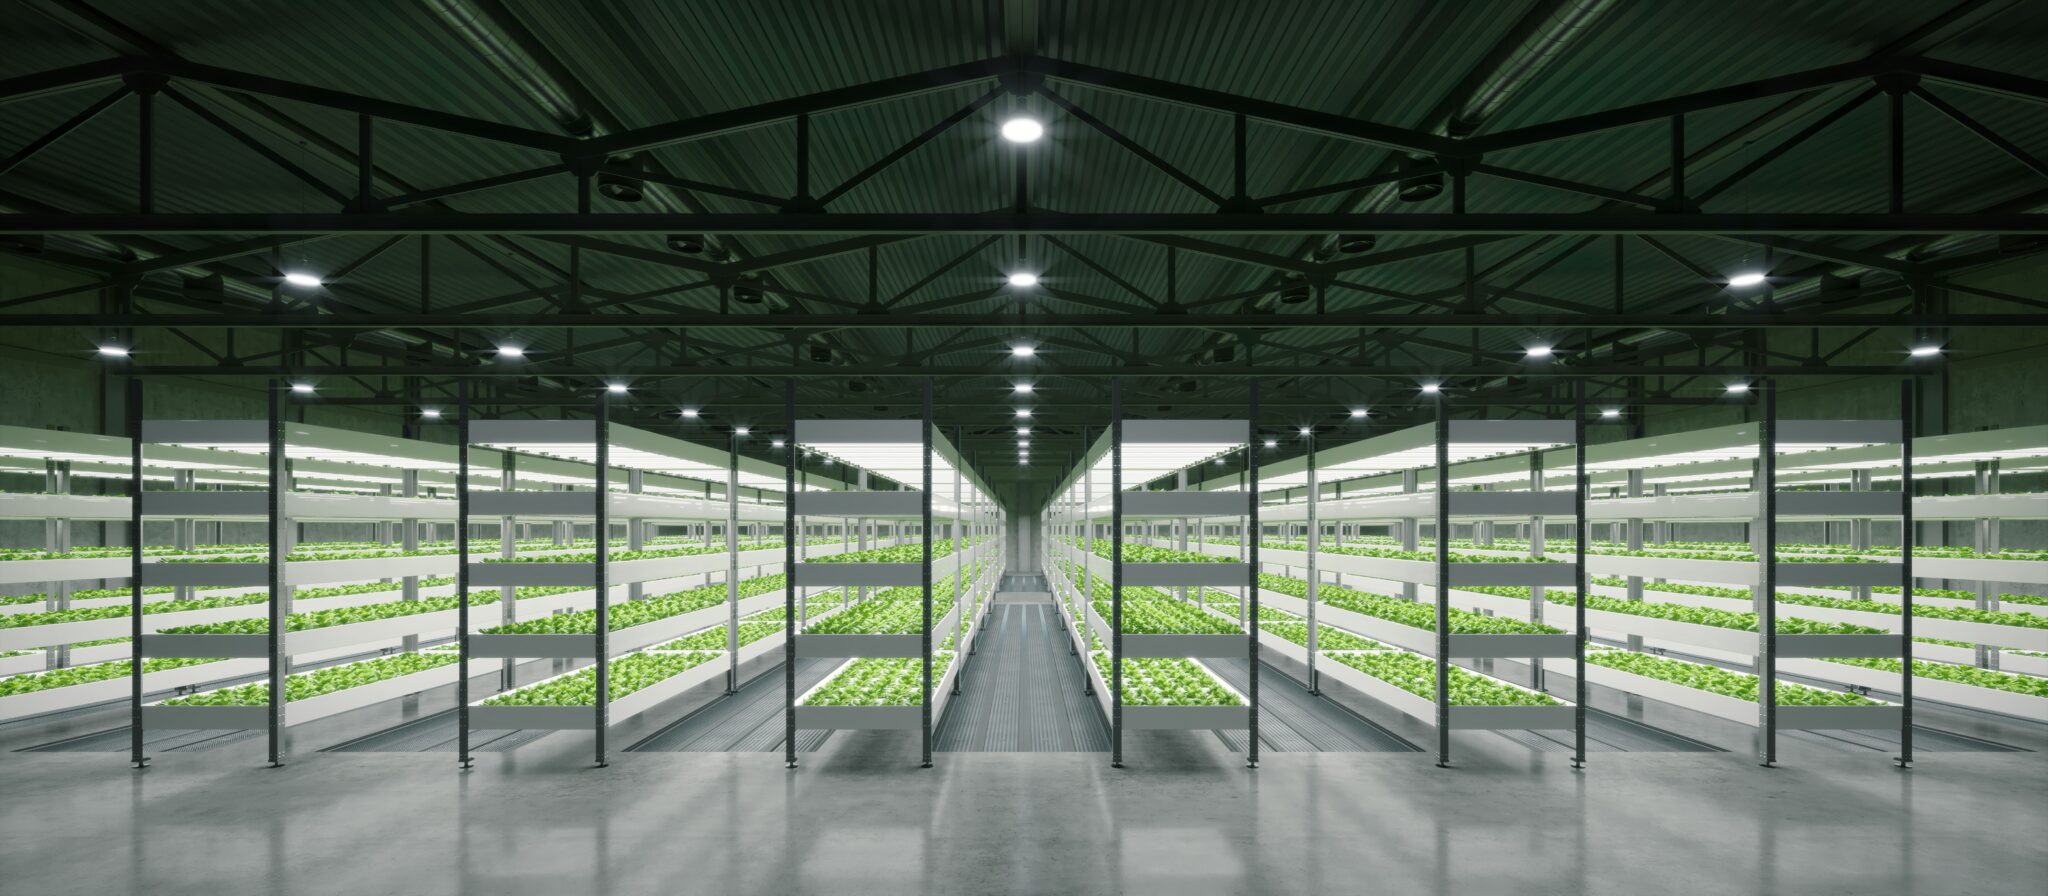 Indoor hydroponic farm